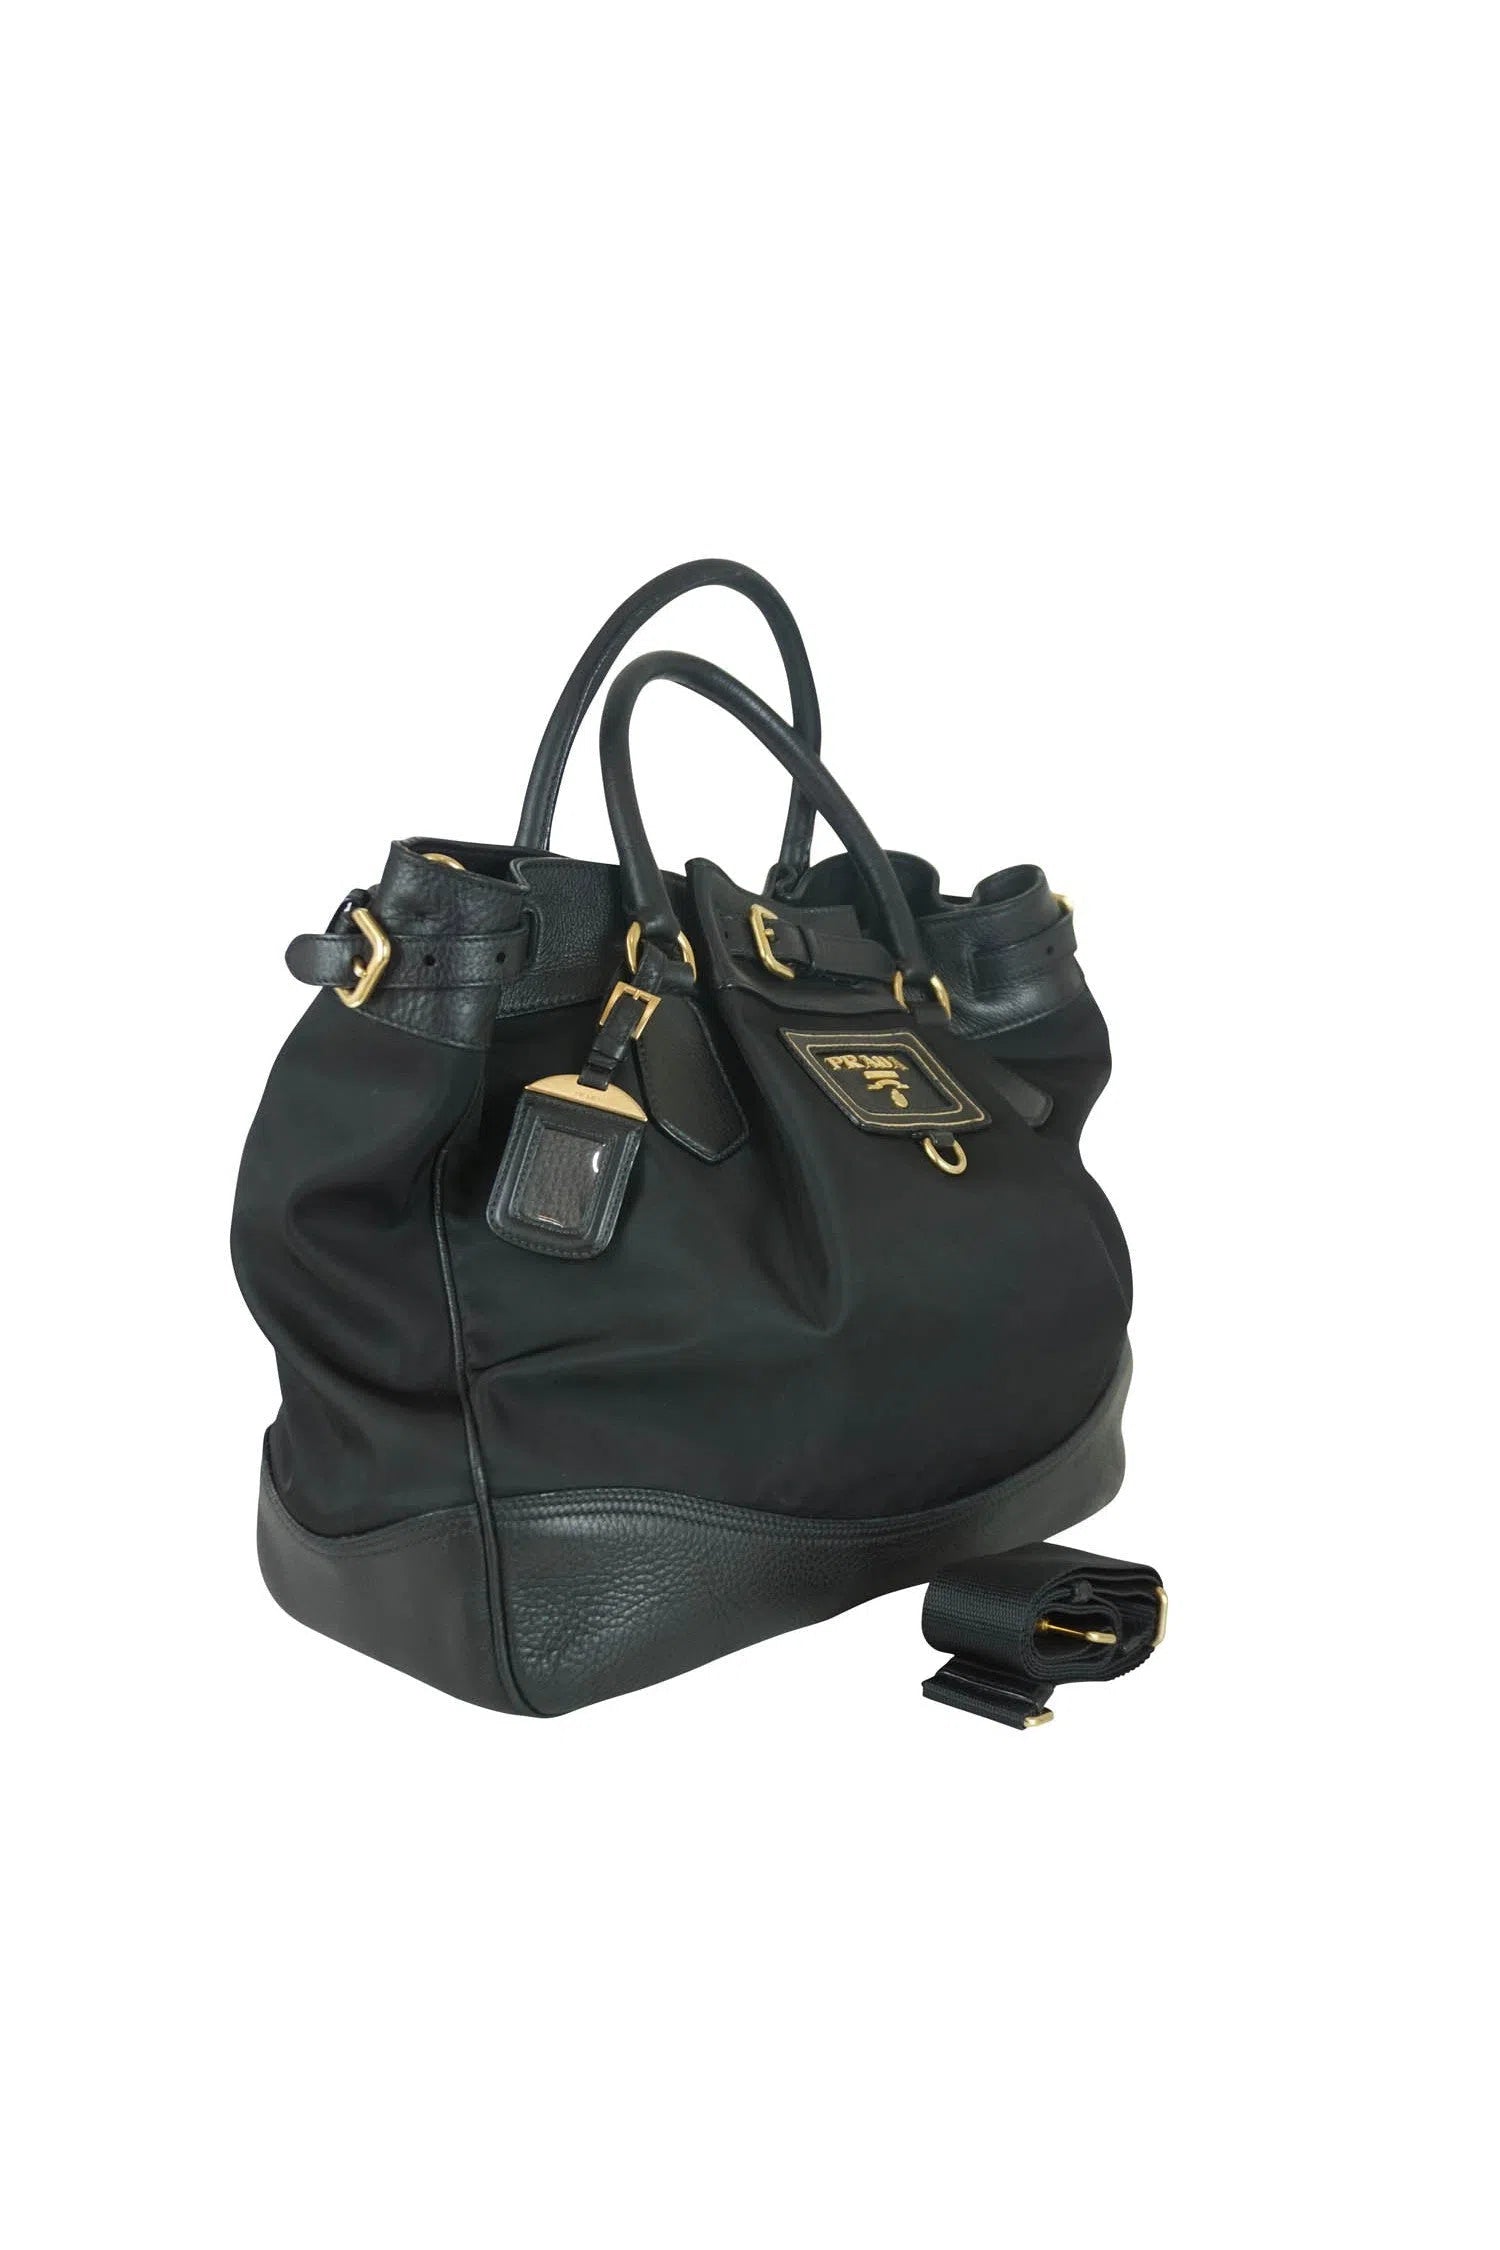 Prada Size Large Black Leather/Nylon GHW w/ Shoulder Strap Tote - Foxy Couture Carmel